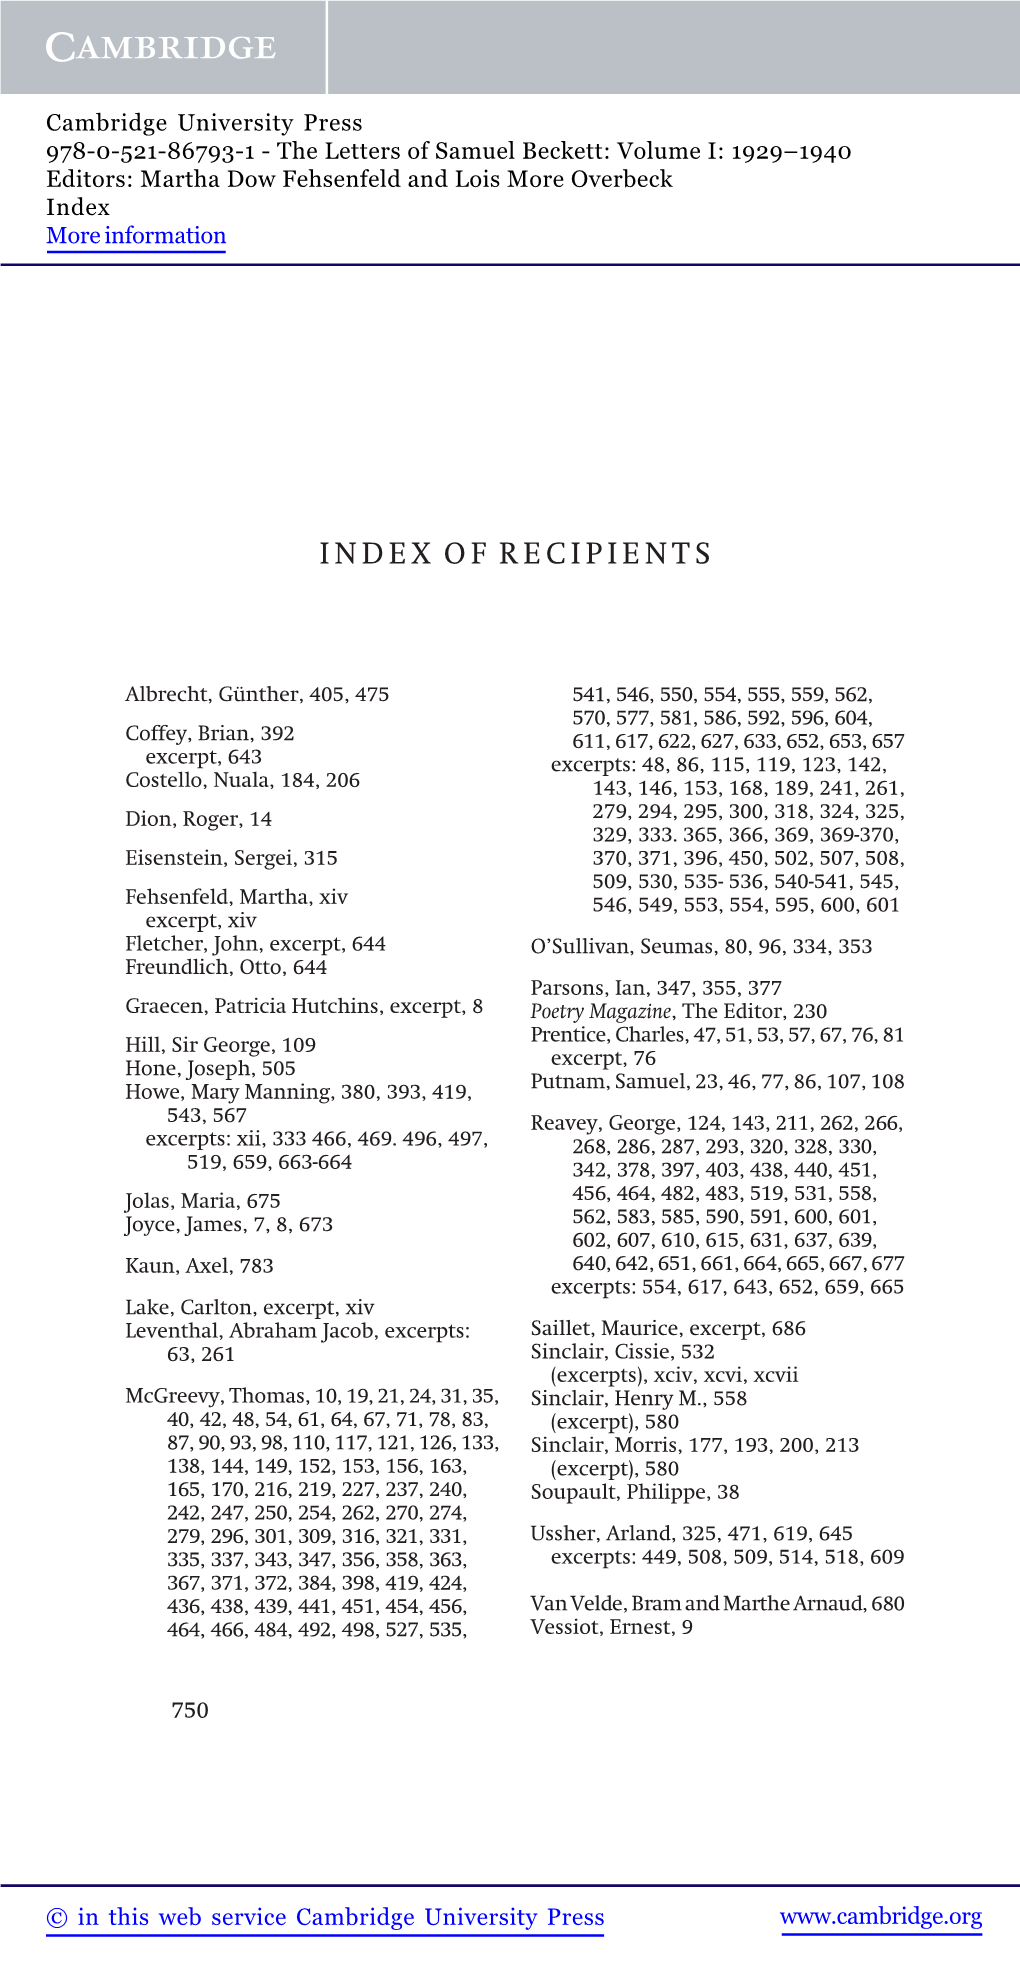 Index of Recipients